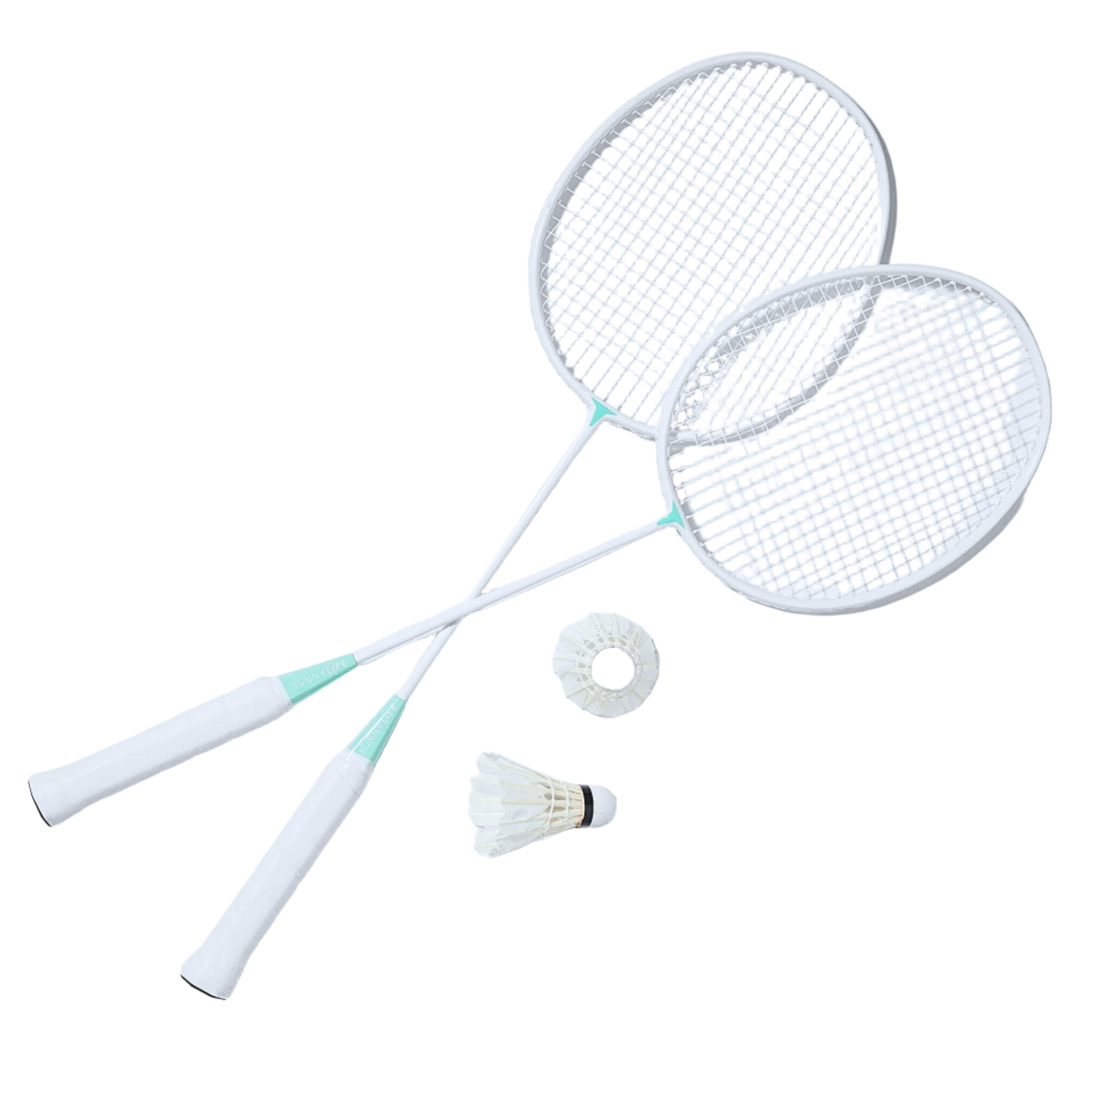 Badminton set